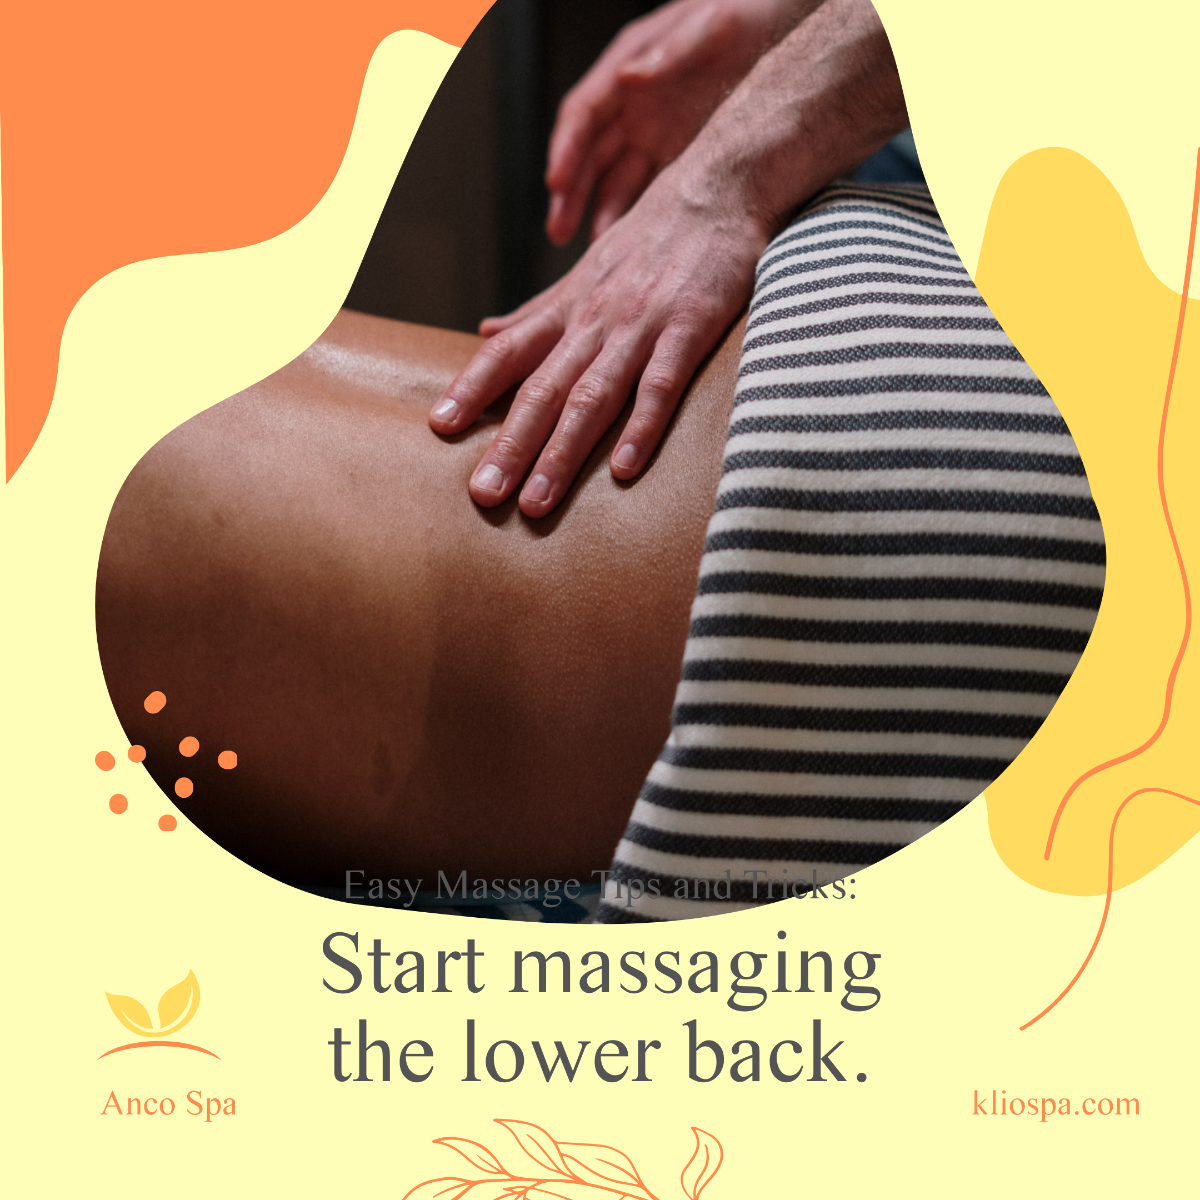 Easy Massage Tips And Tricks Post, Instagram, Facebook